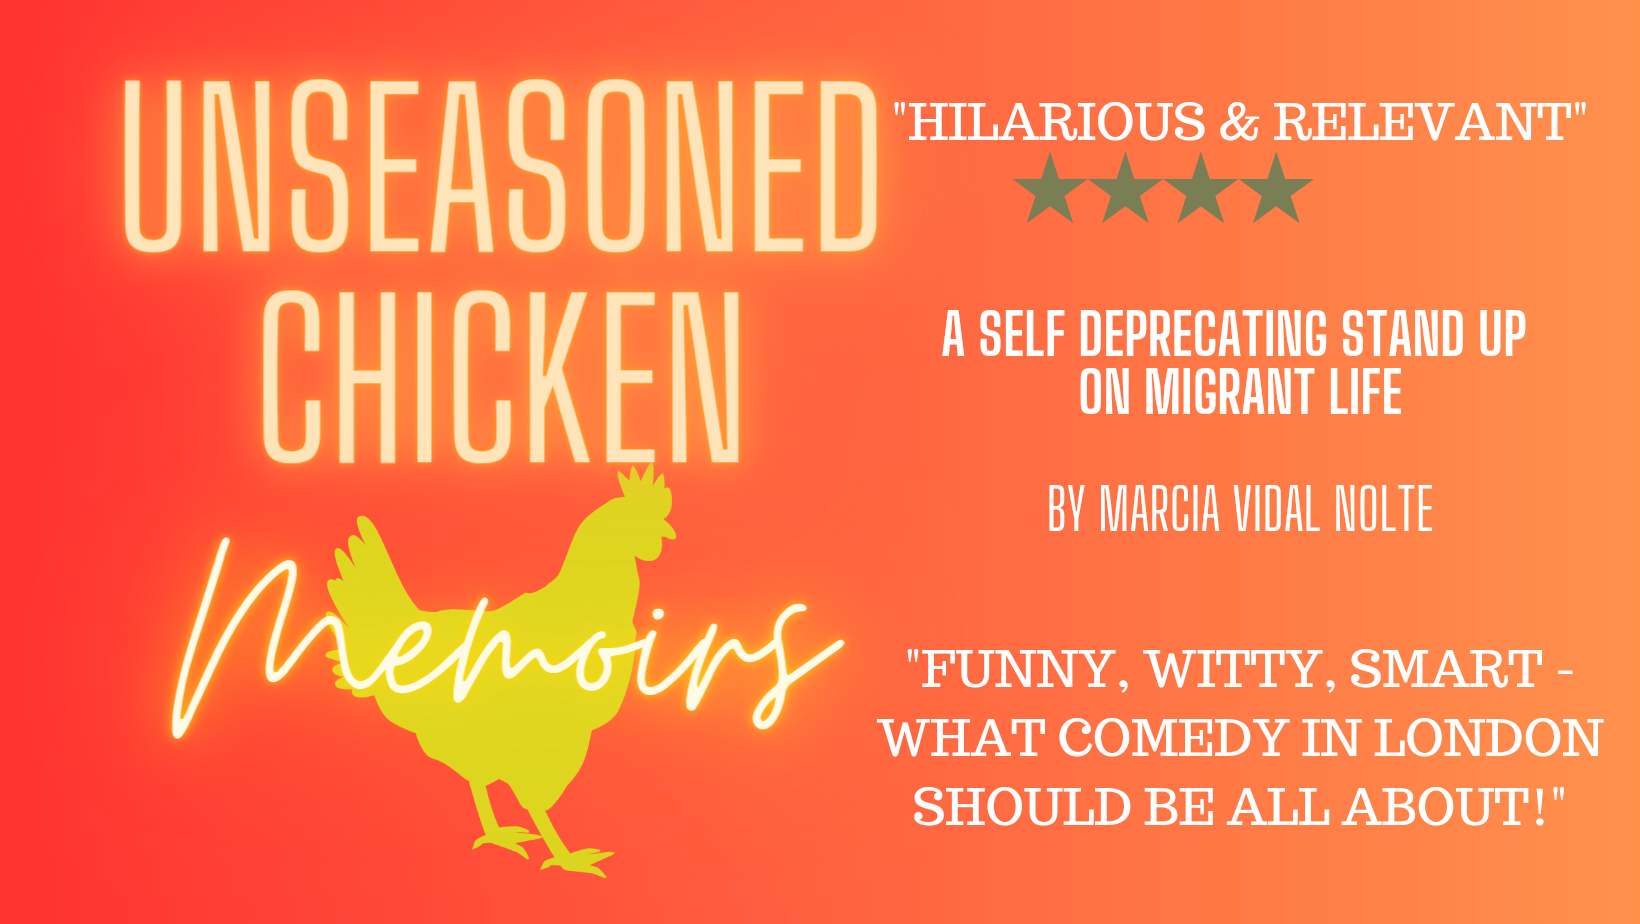 Unseasoned Chicken Memoirs